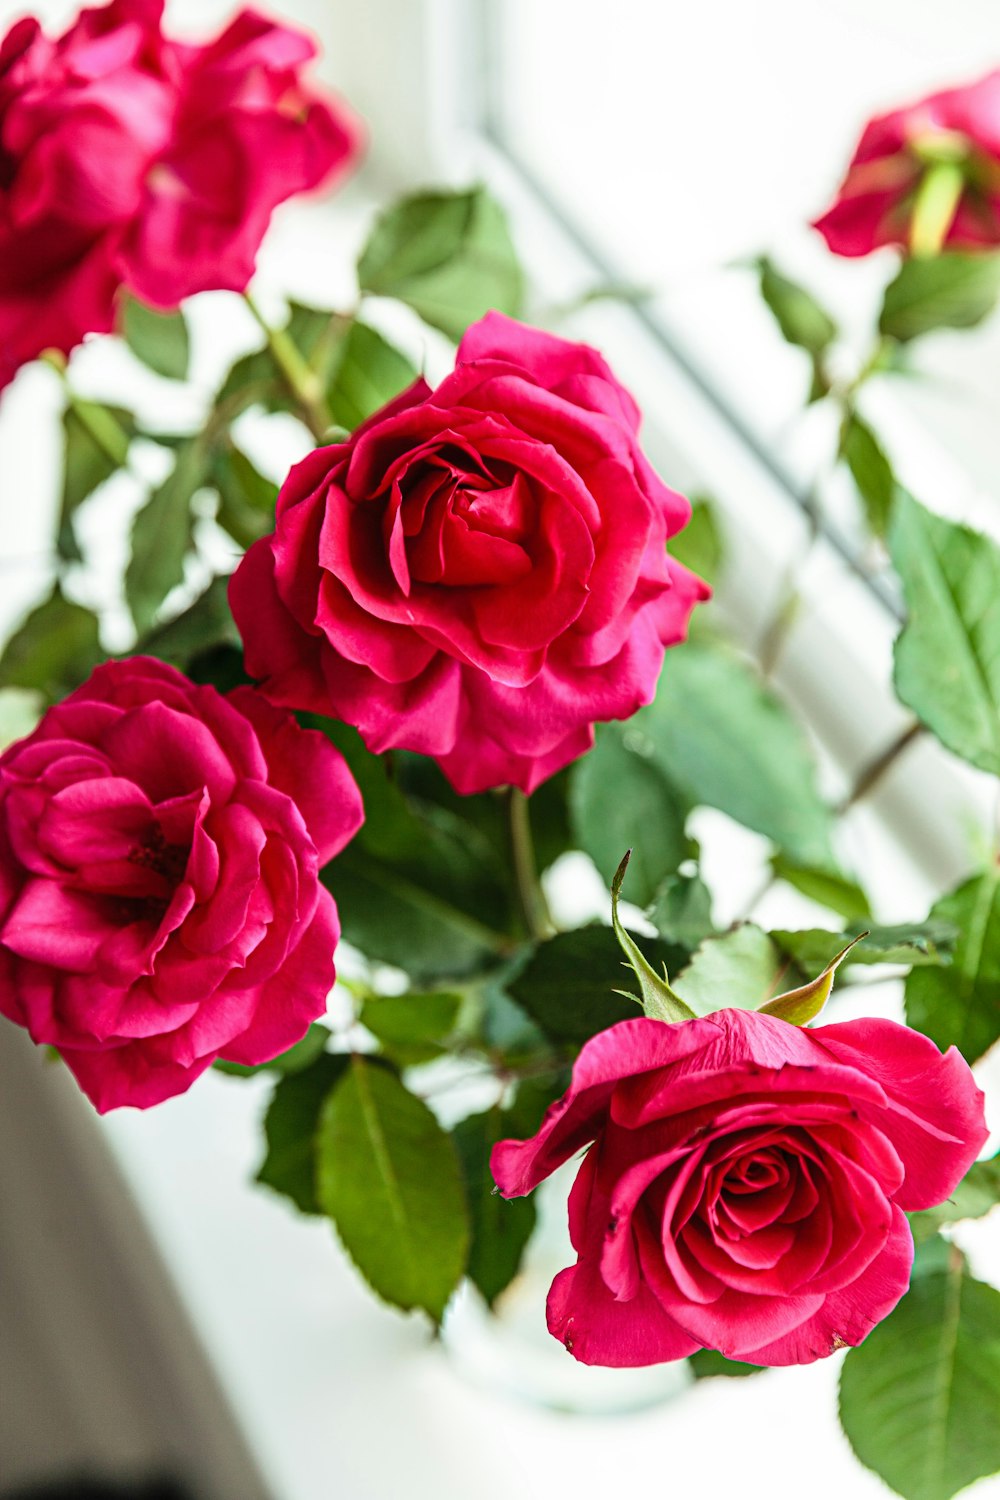 Red rose flowers photo – Free Flower Image on Unsplash